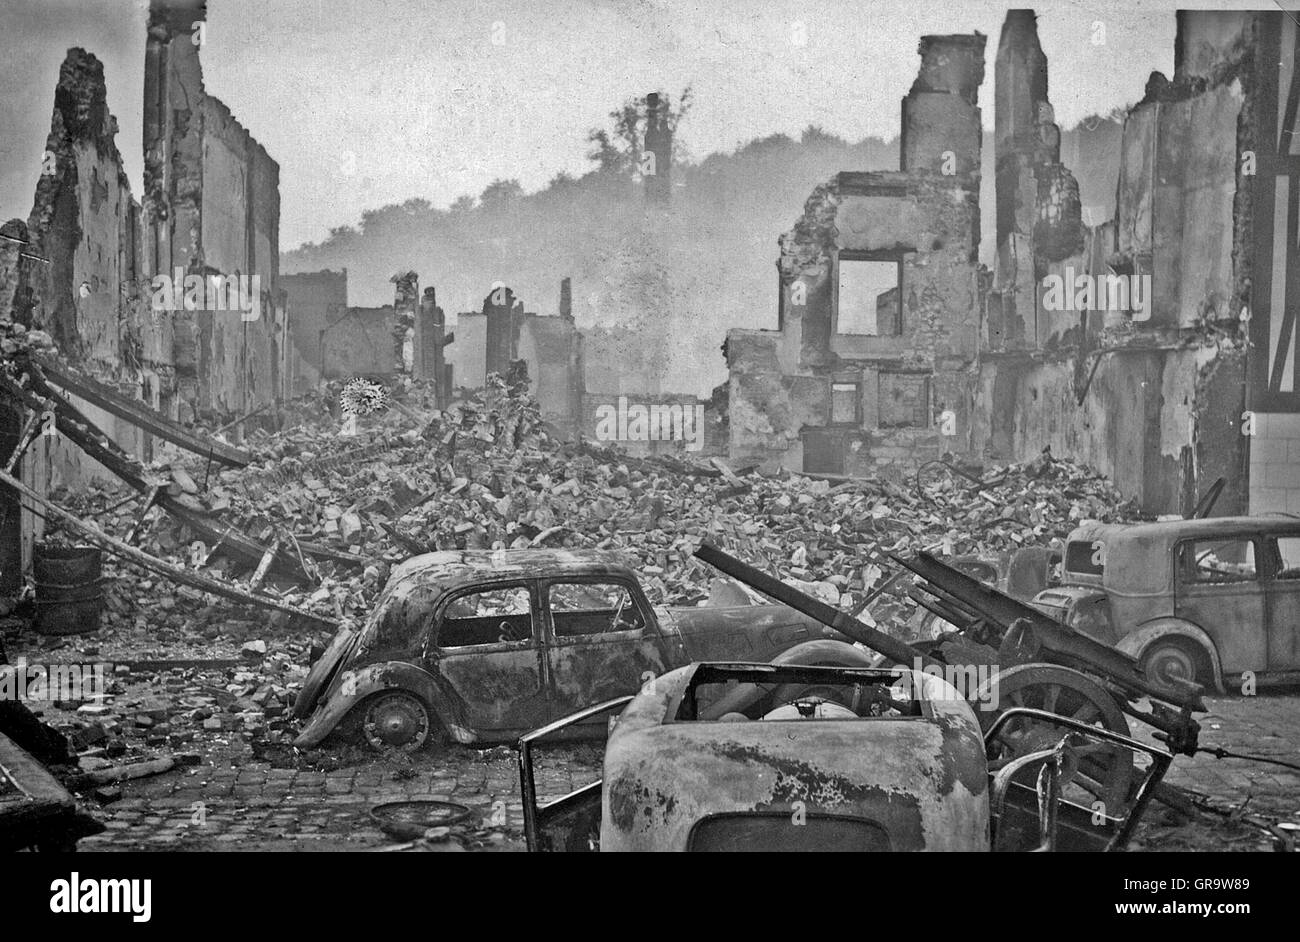 Destruction In World War Ii In 1940 In Belgium Stock Photo Royalty